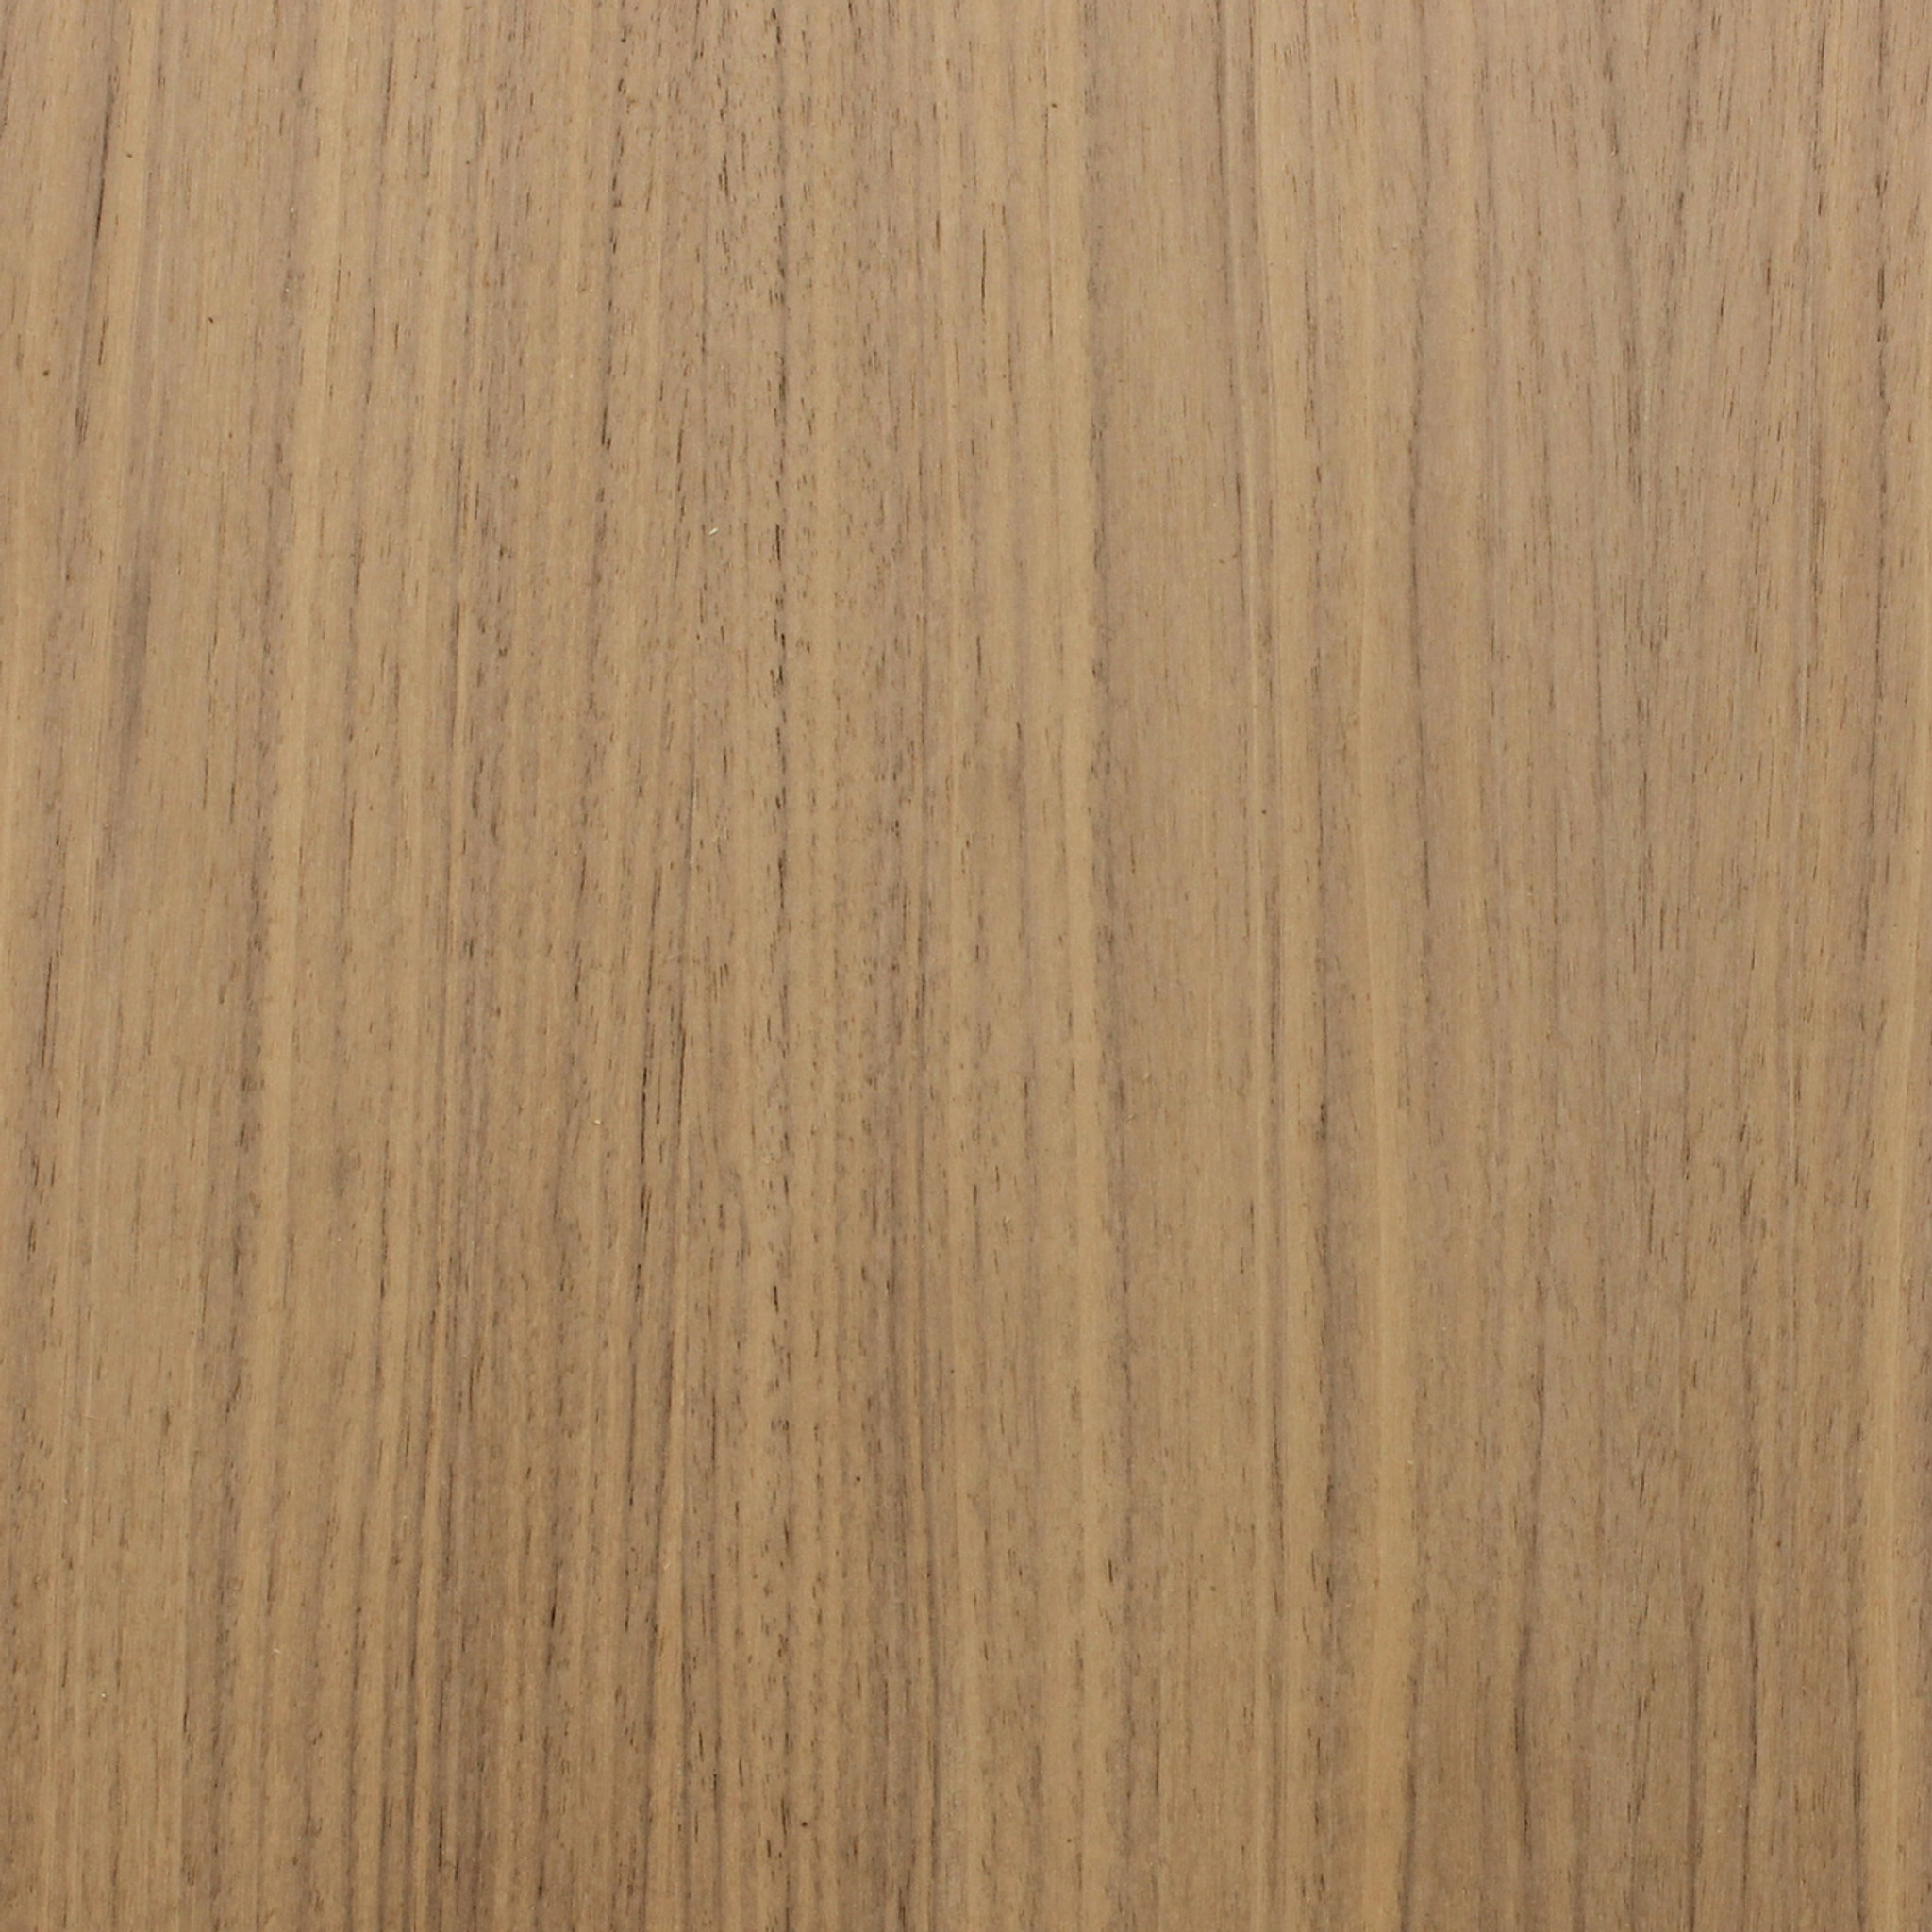 Etimoe Walnut wood composite veneer 5 x 8 with thin fleece back # unknown